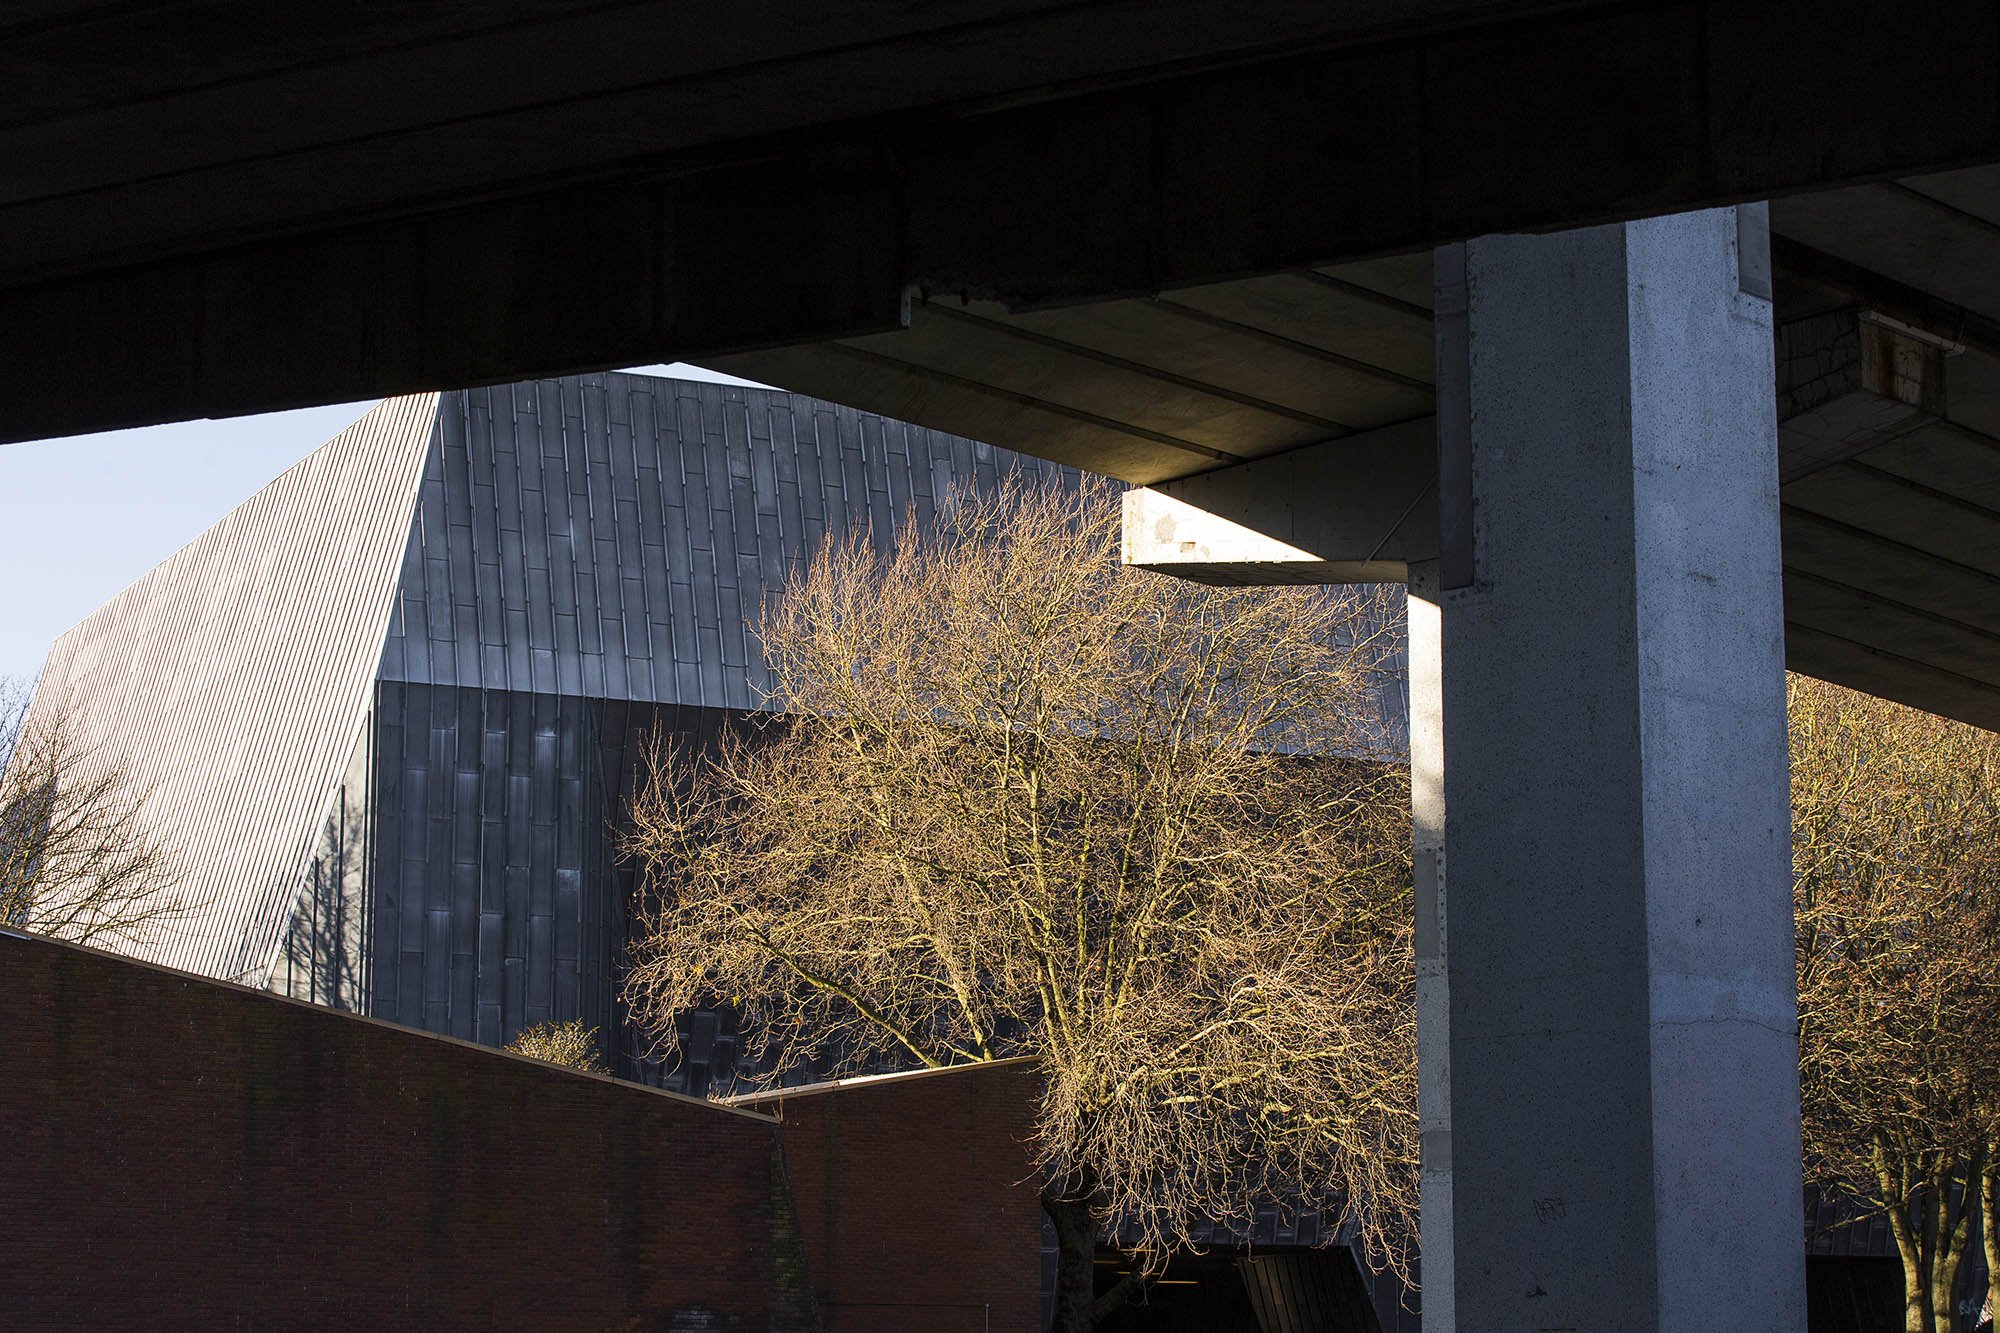  Brutalist architecture, Coventry 